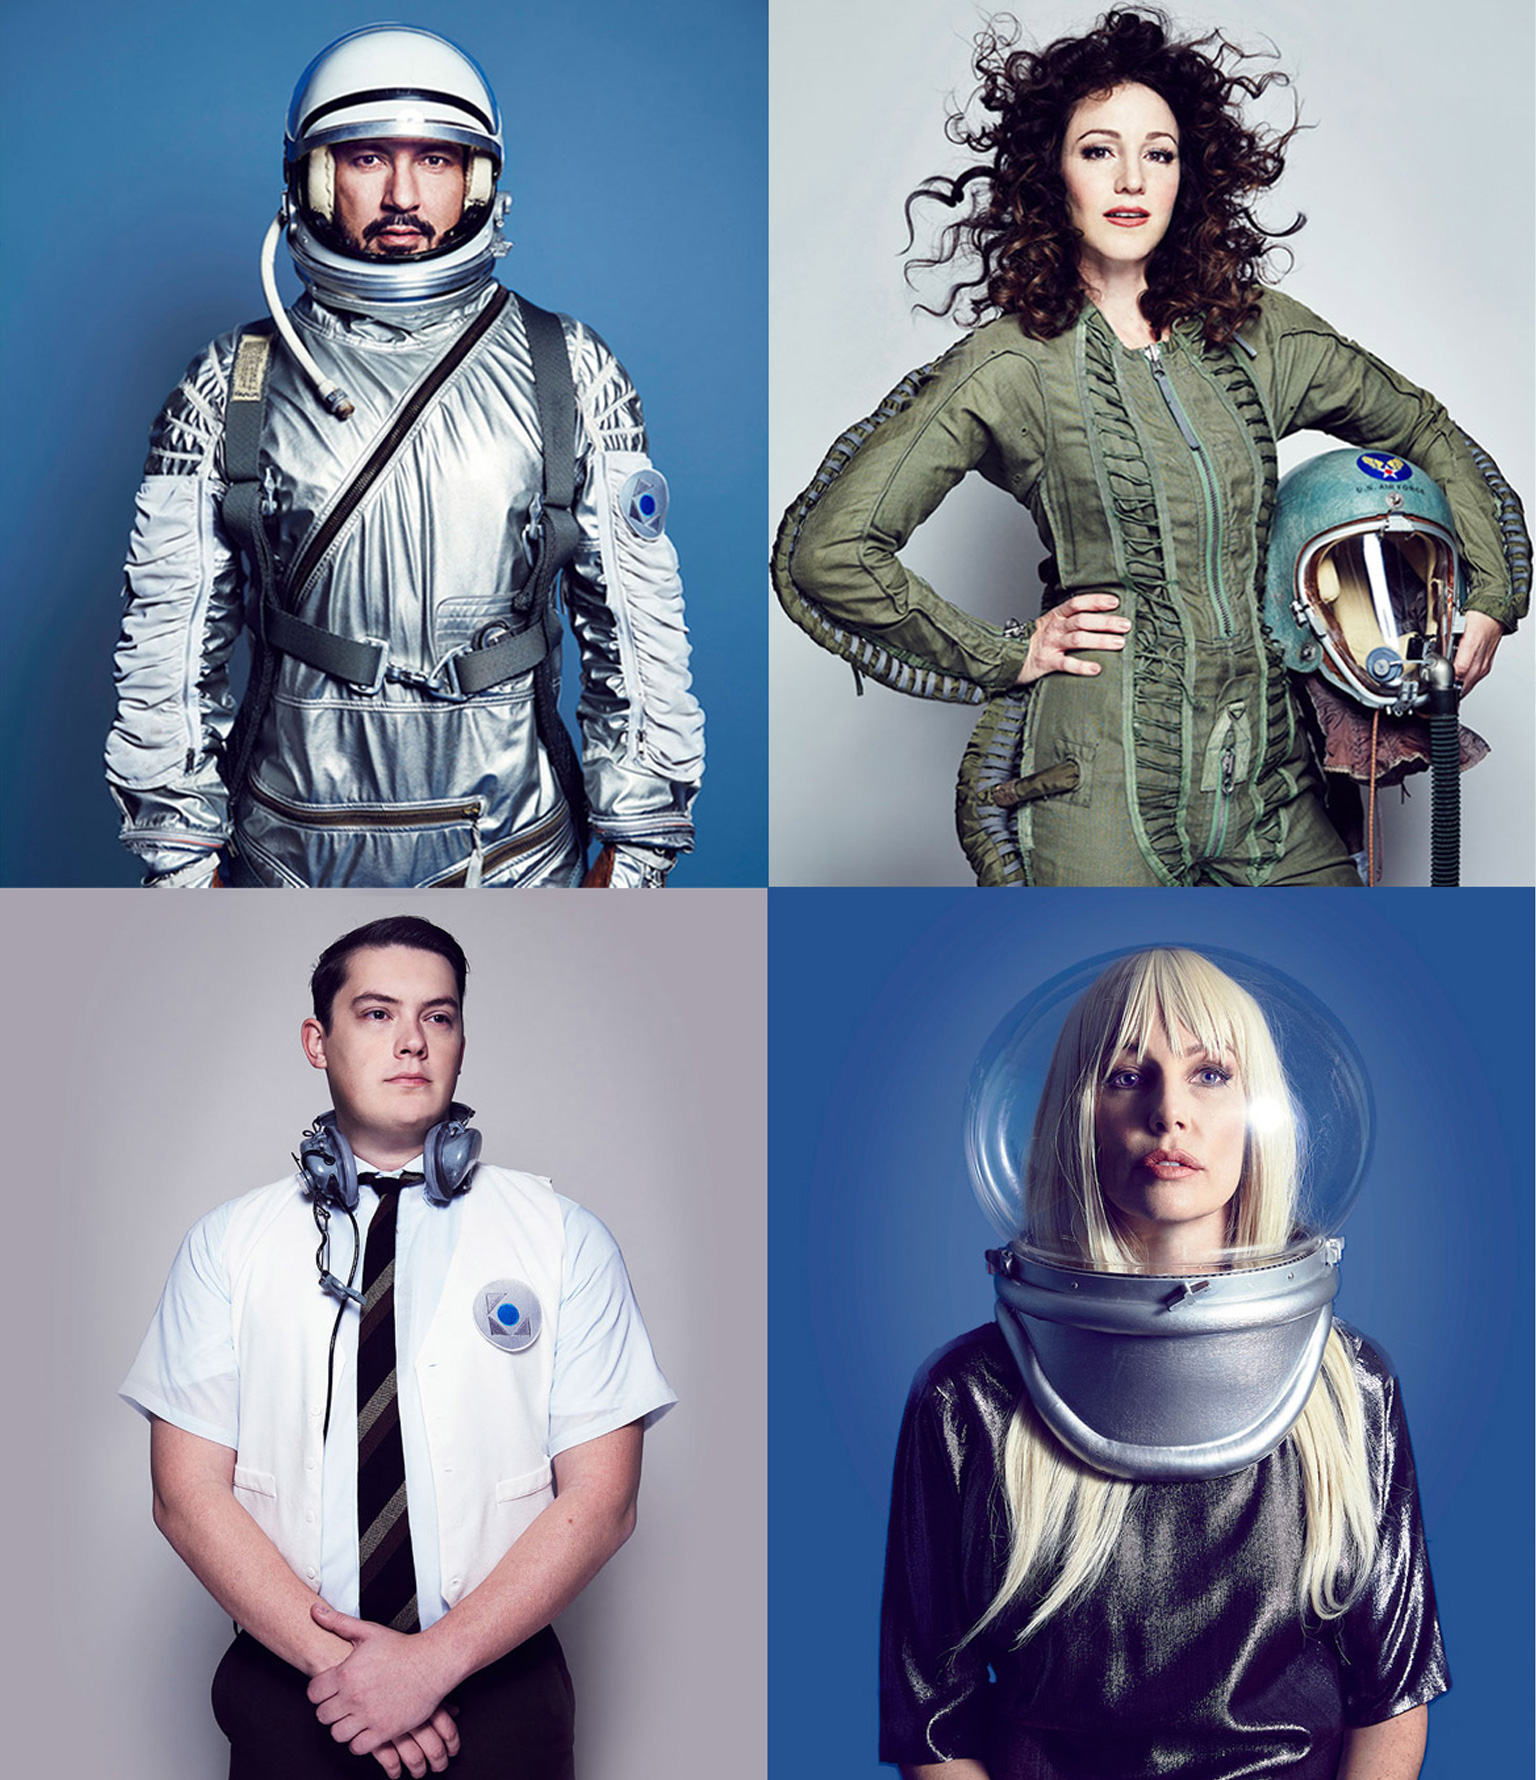 bluegiant team of 4 people wearing astronaut costumes